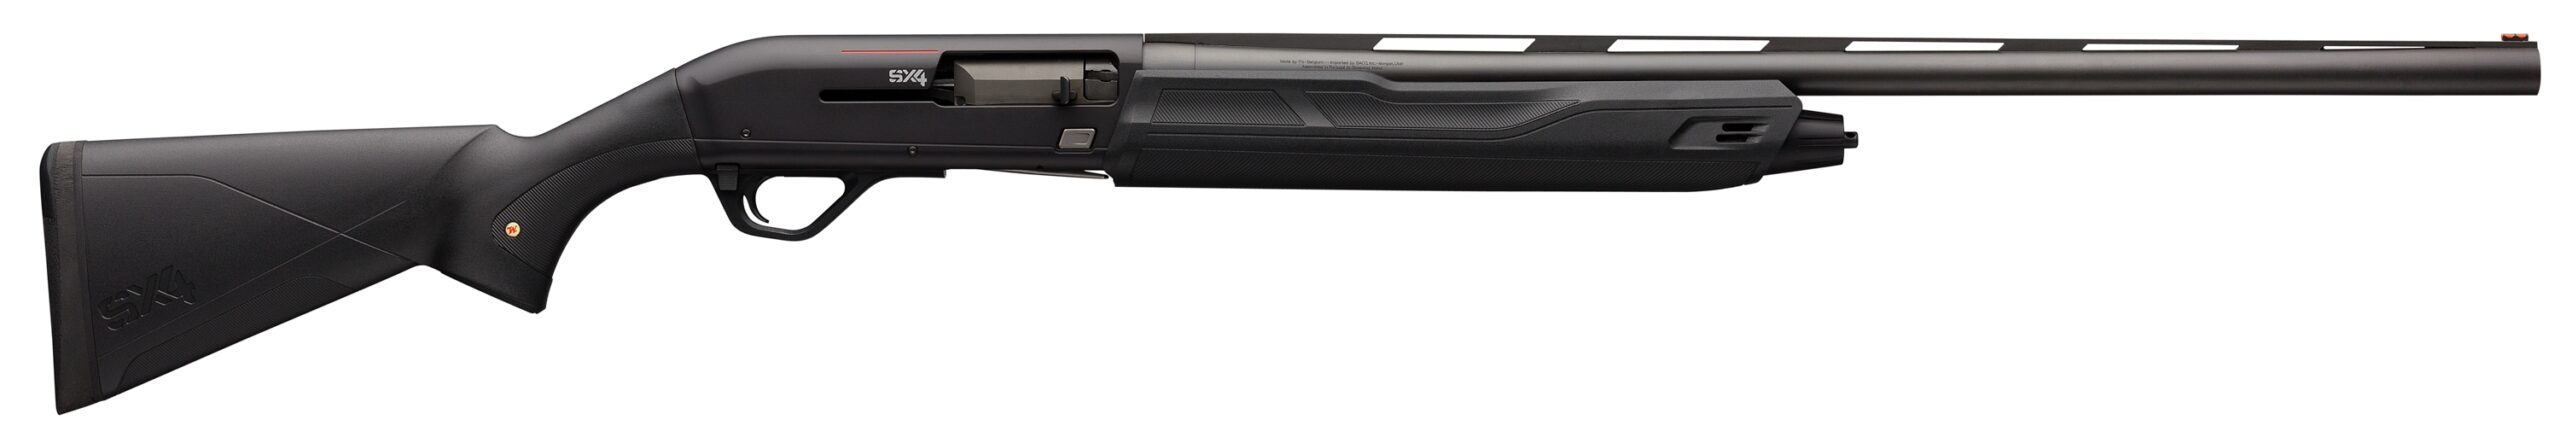 Winchester SX4 Compact.